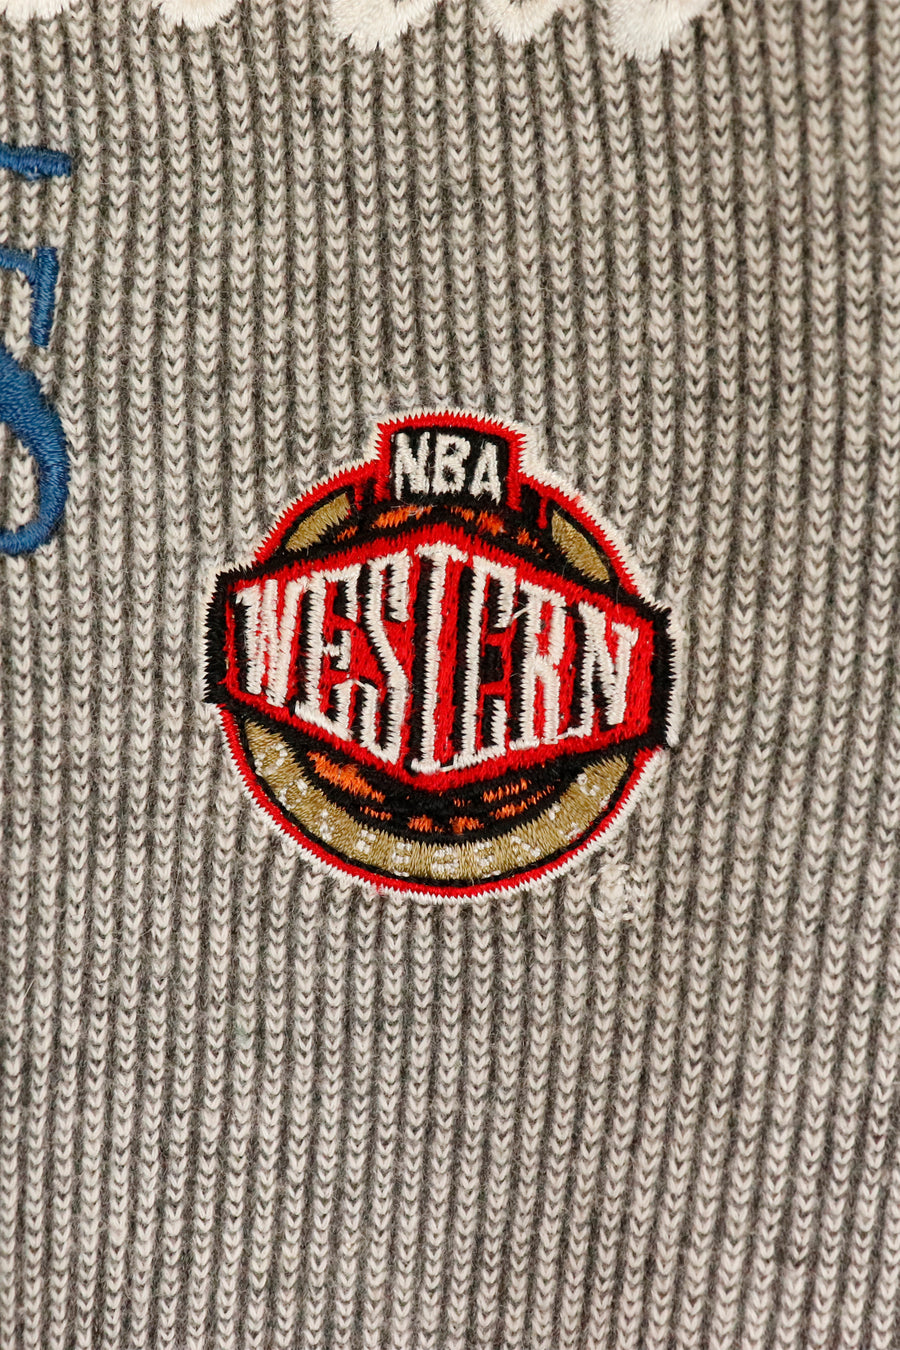 Vintage NBA Minisota Timberwolves Embroidered Sweatshirt Sz M